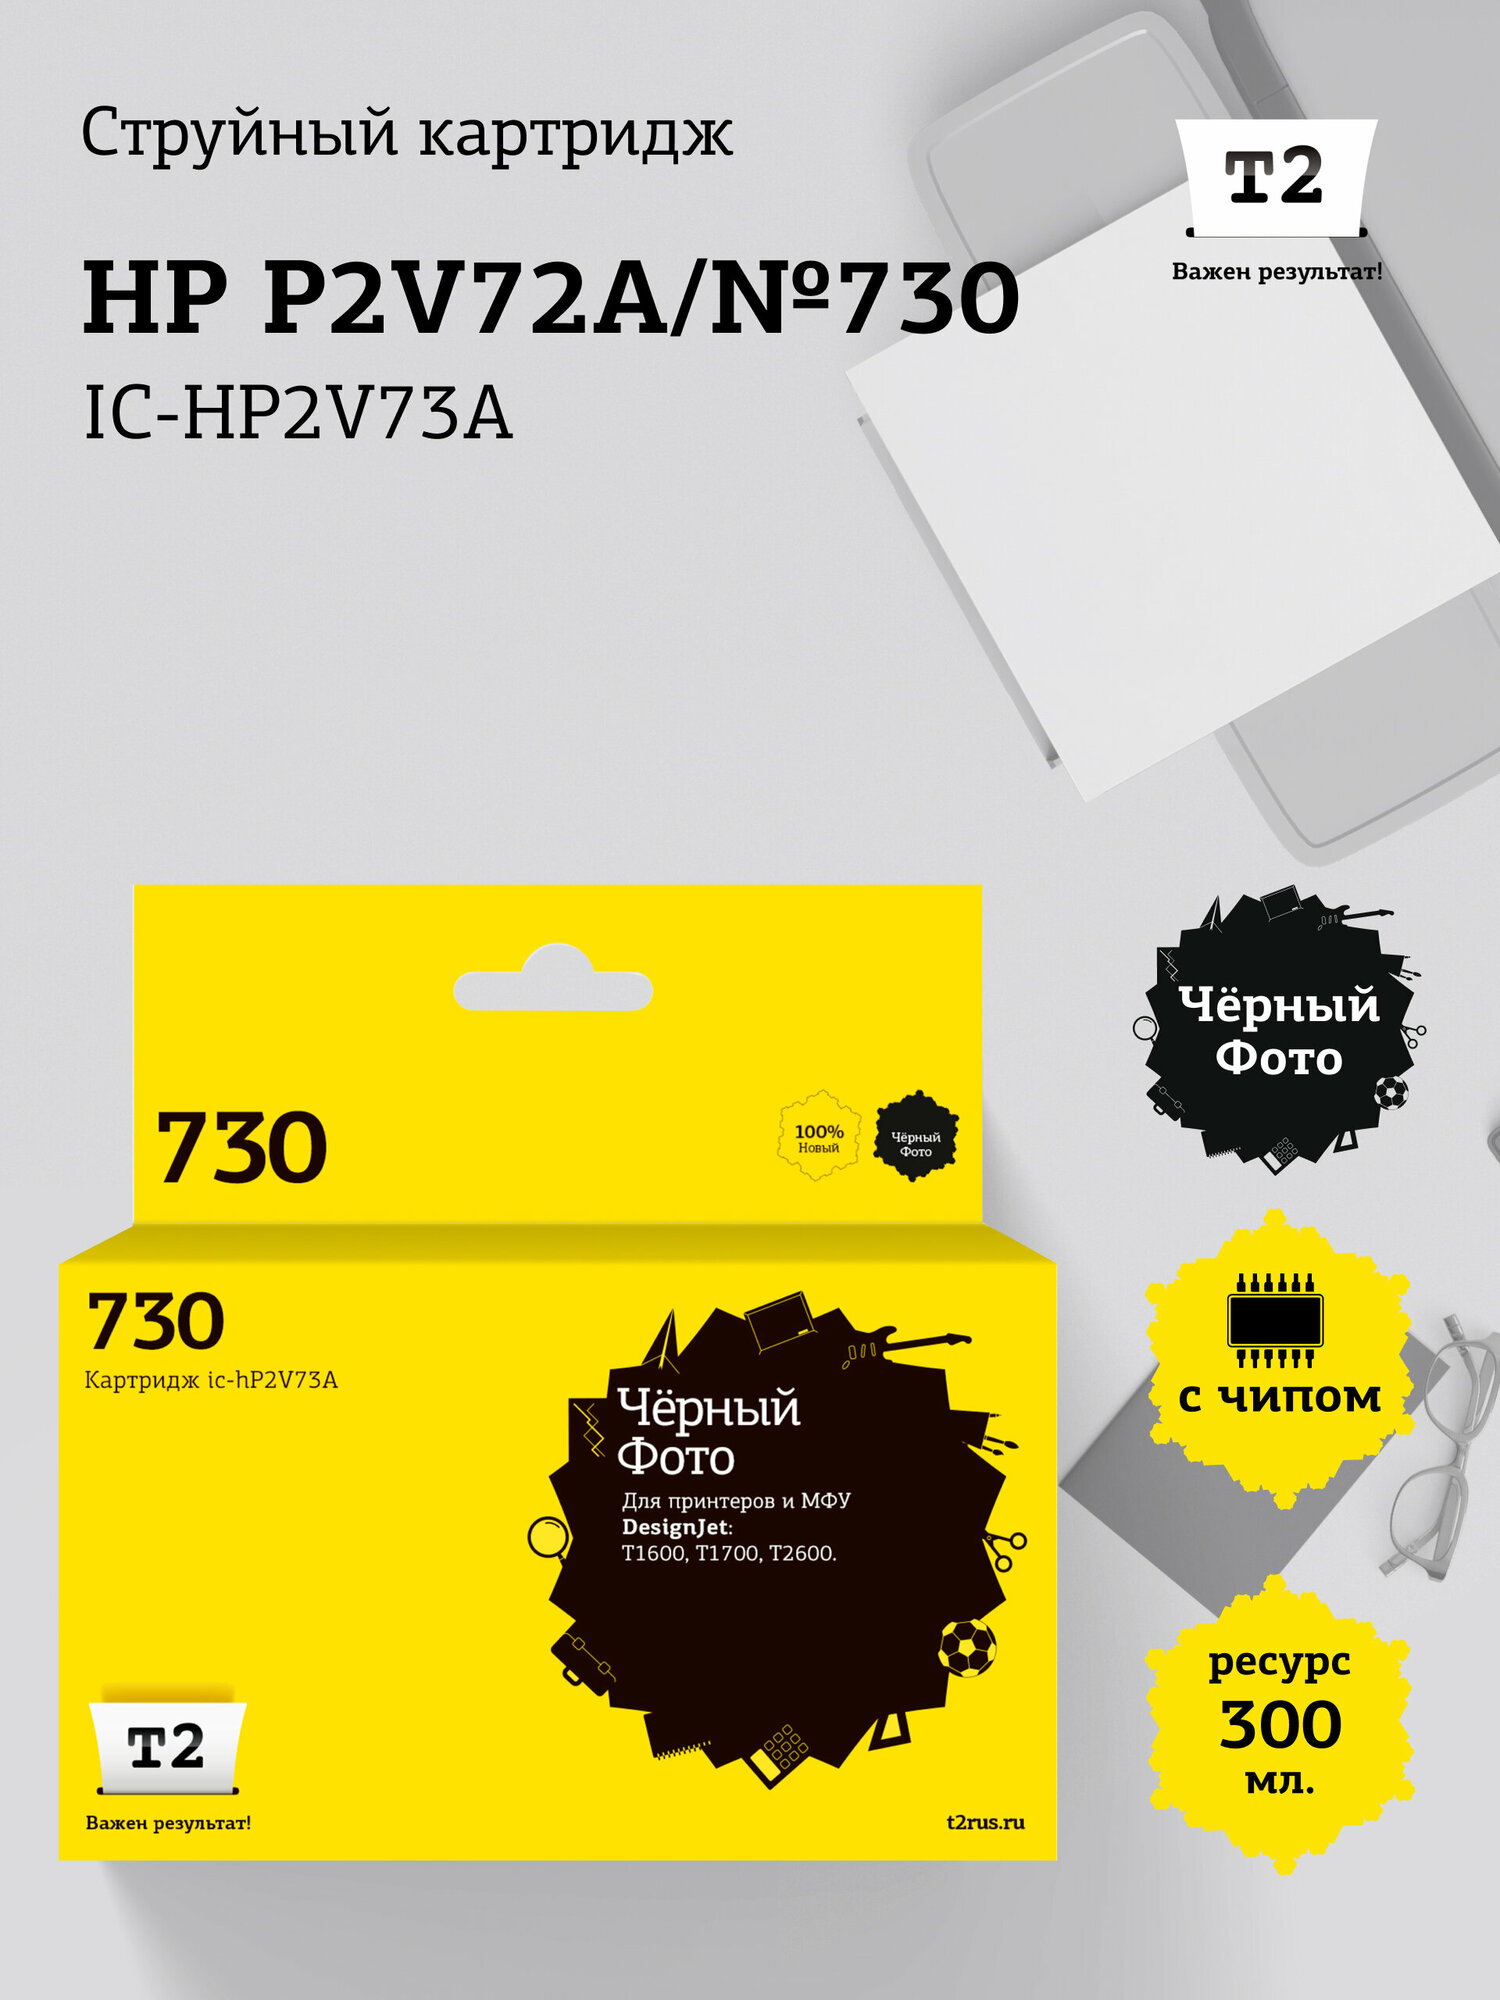 IC-HP2V73A Картридж T2 №730 для HP DesignJet T1600, T1700, T2600 (300мл.) фото черный, с чипом